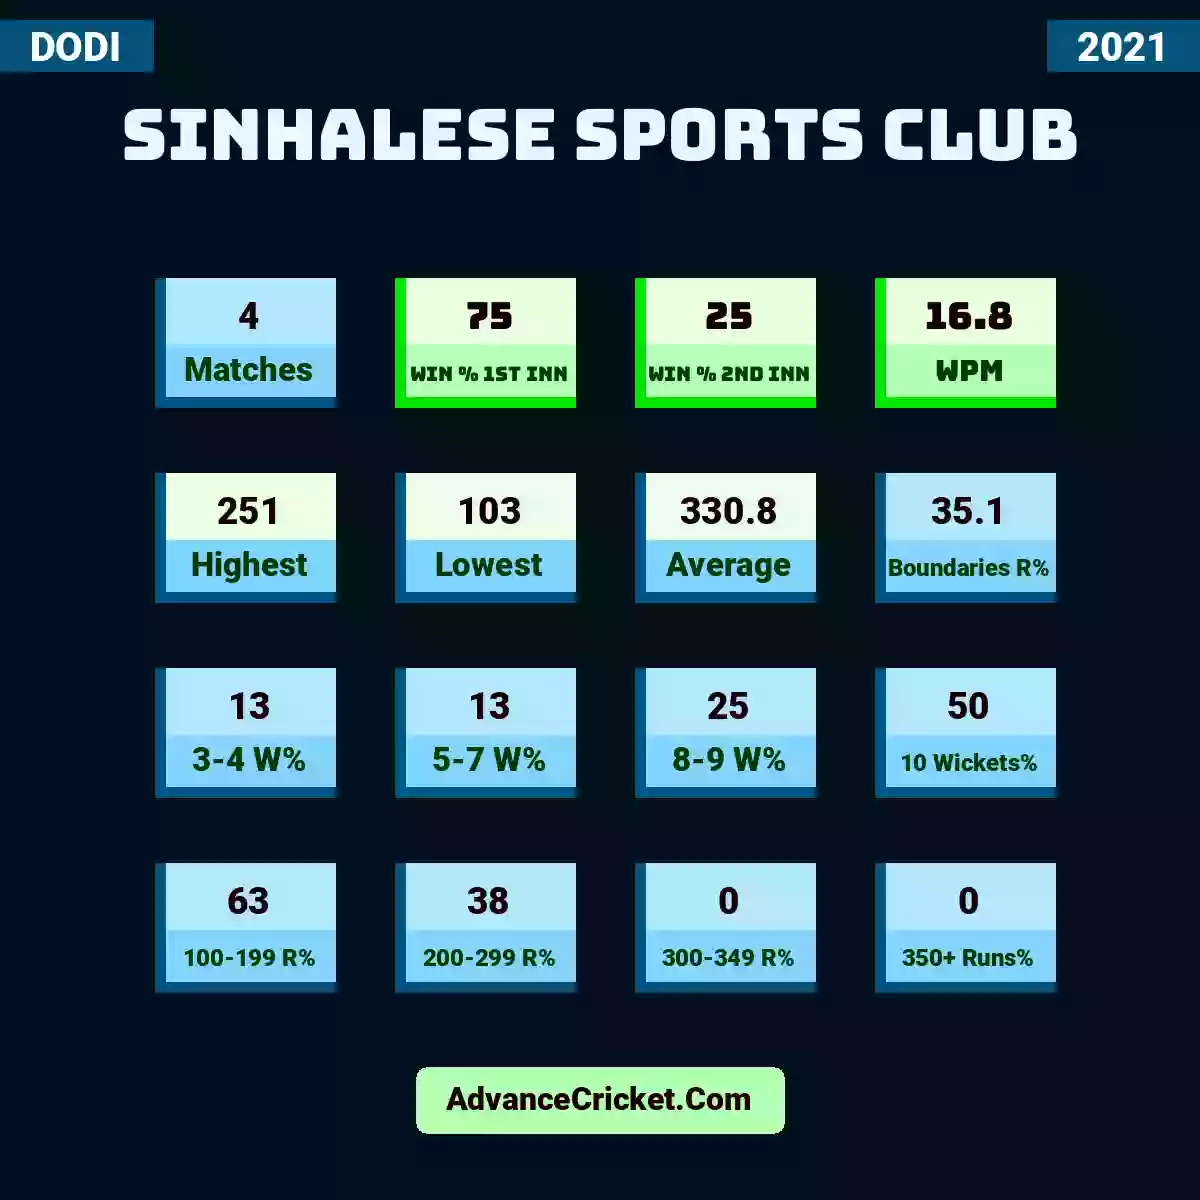 Image showing Sinhalese Sports Club with Matches: 4, Win % 1st Inn: 75, Win % 2nd Inn: 25, WPM: 16.8, Highest: 251, Lowest: 103, Average: 330.8, Boundaries R%: 35.1, 3-4 W%: 13, 5-7 W%: 13, 8-9 W%: 25, 10 Wickets%: 50, 100-199 R%: 63, 200-299 R%: 38, 300-349 R%: 0, 350+ Runs%: 0.